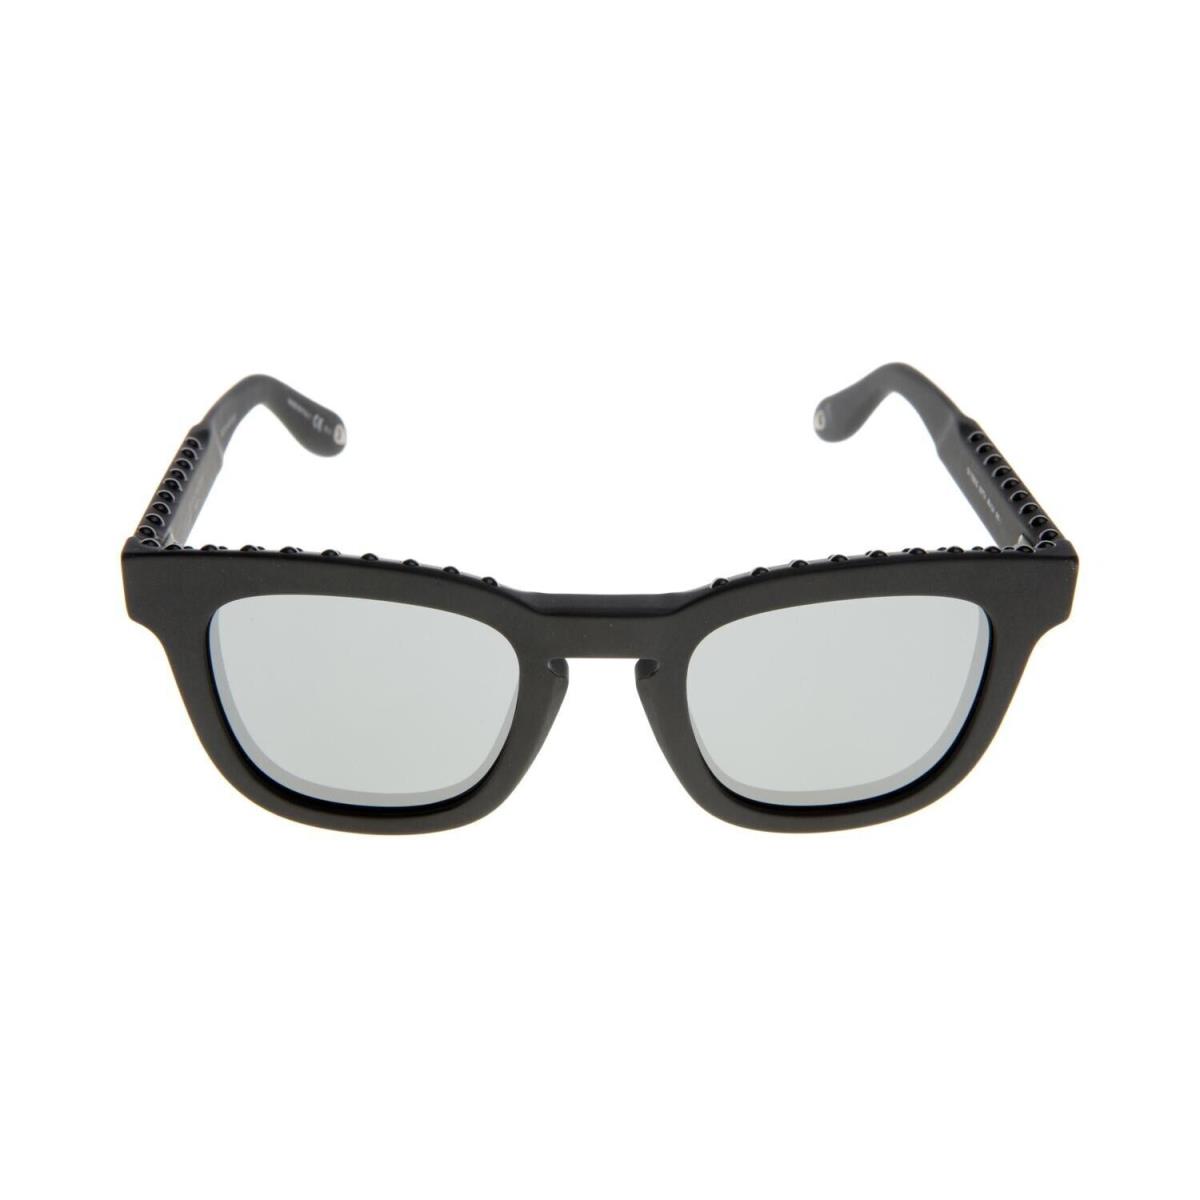 Givenchy Grey Square Unisex Sunglasses Item No. GV 7006/S 807 48